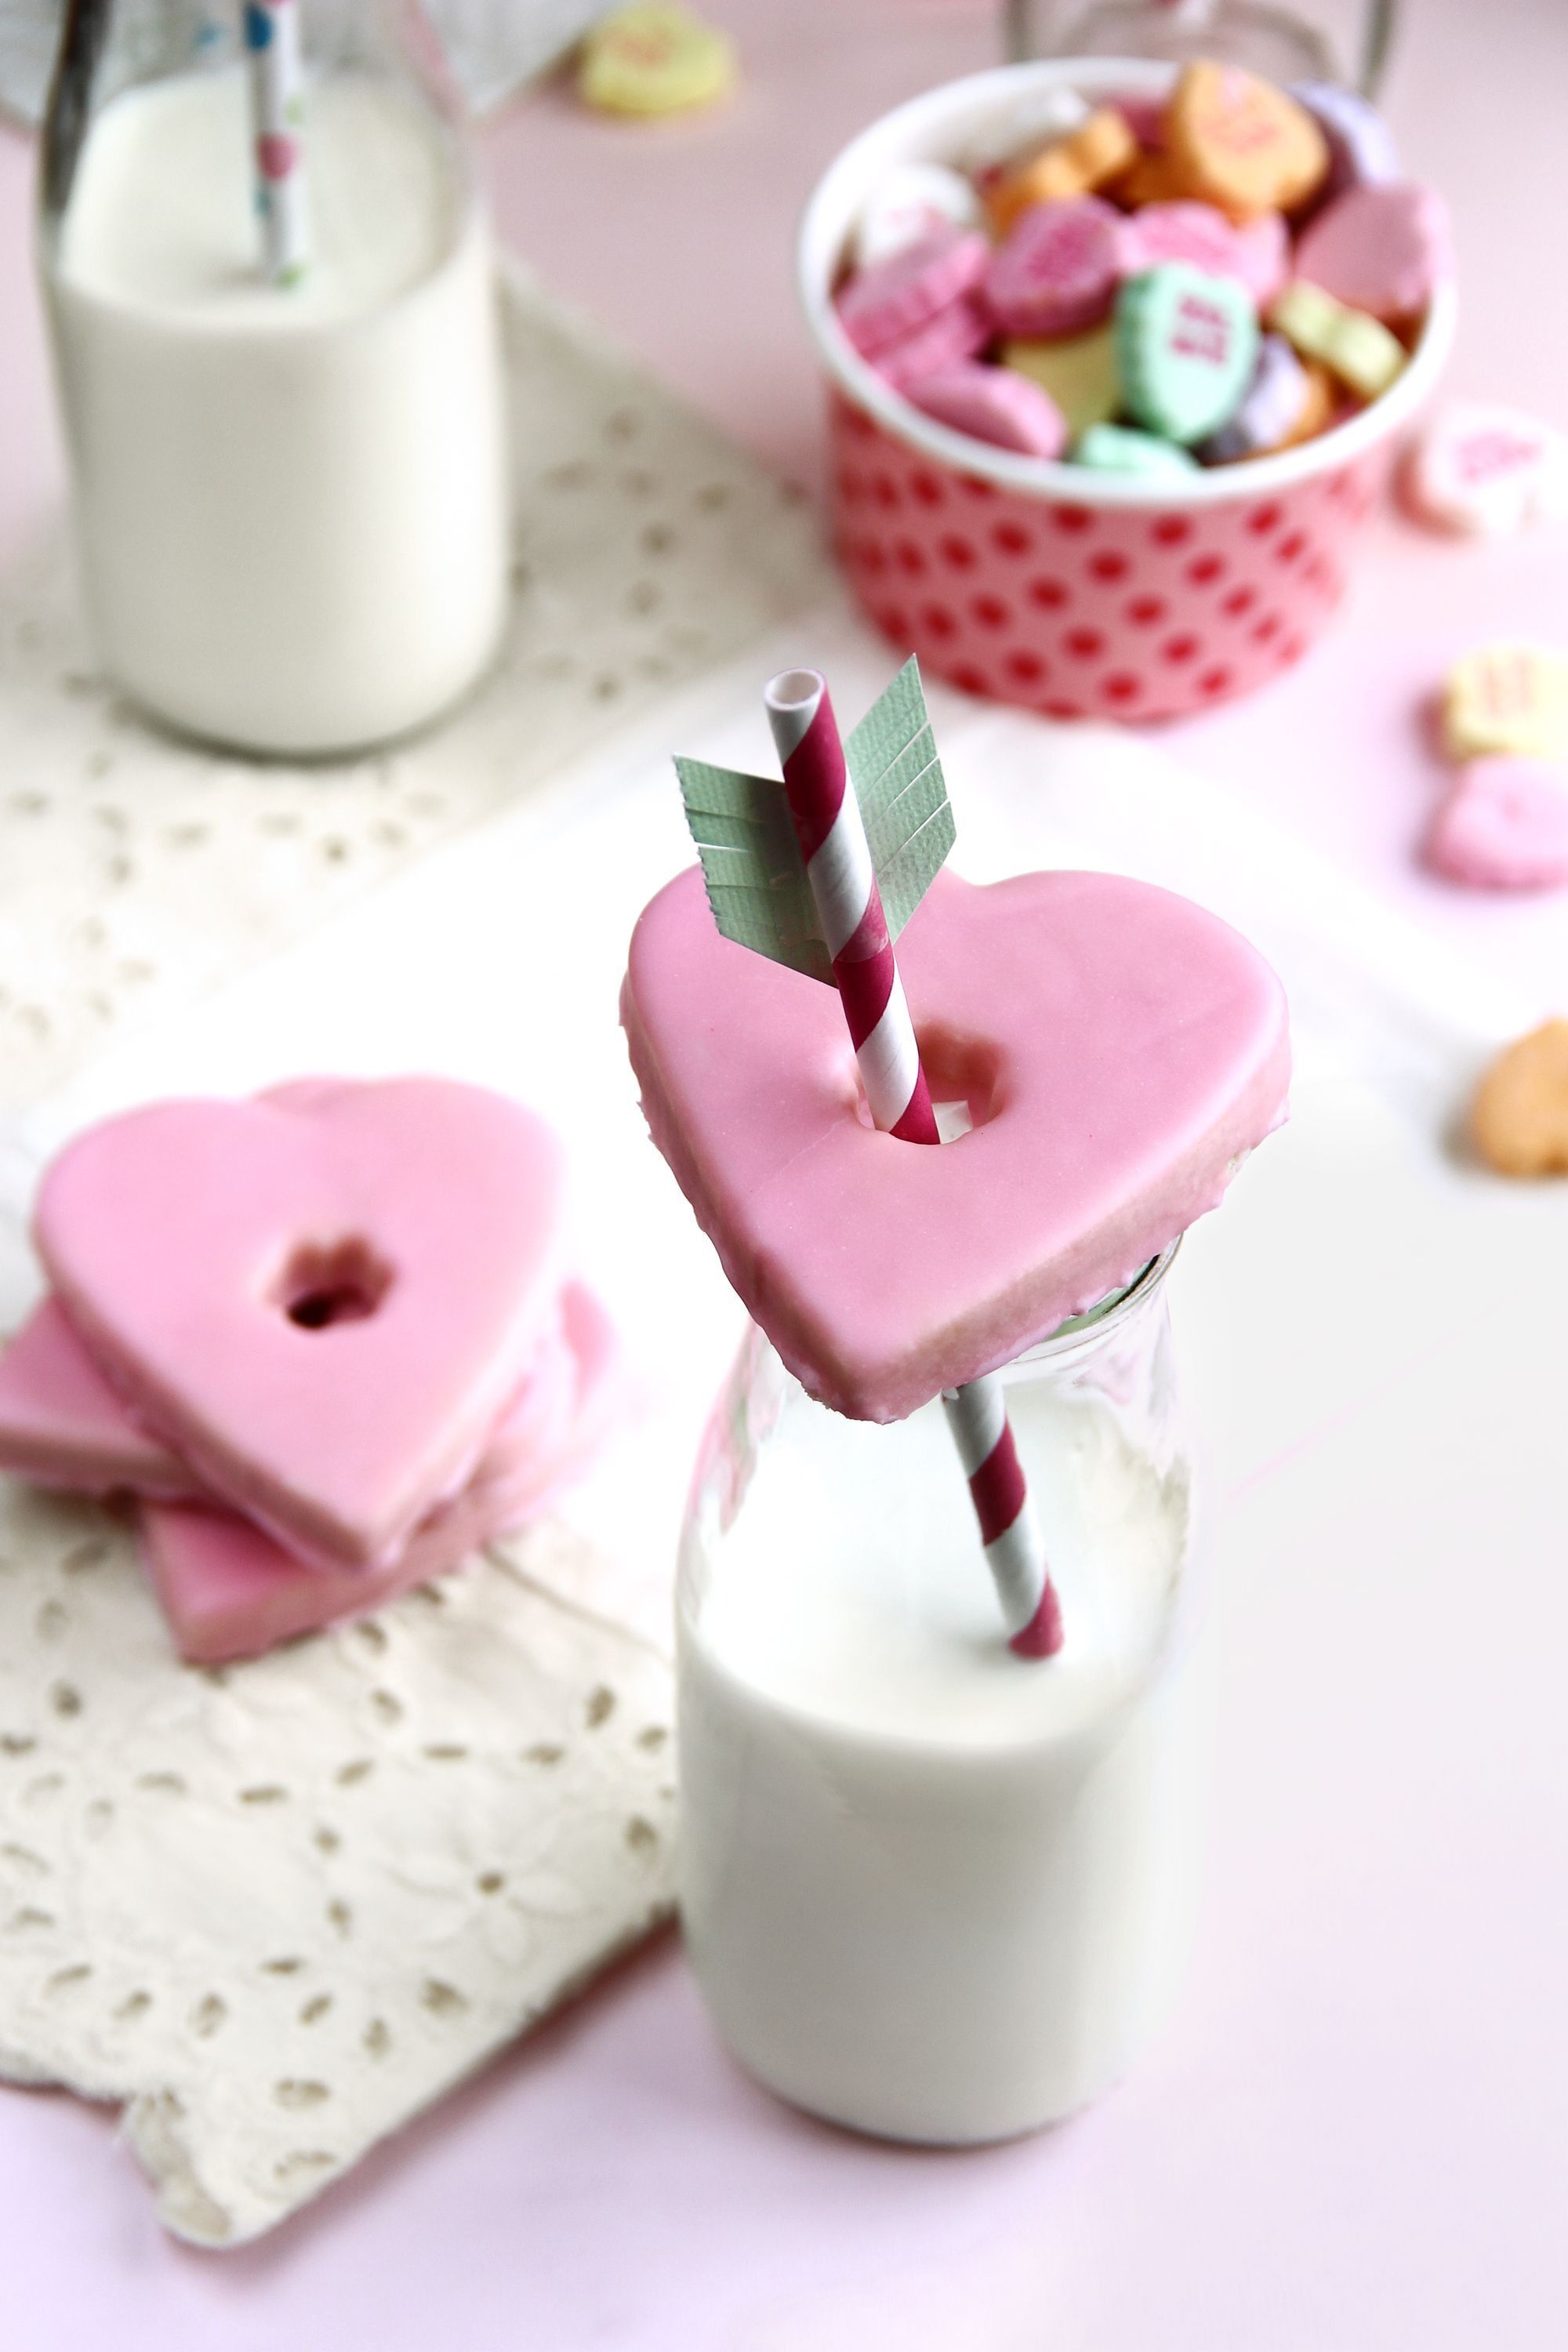 Best Valentine Cake Ideas to Make Your Valentine Day Memorable